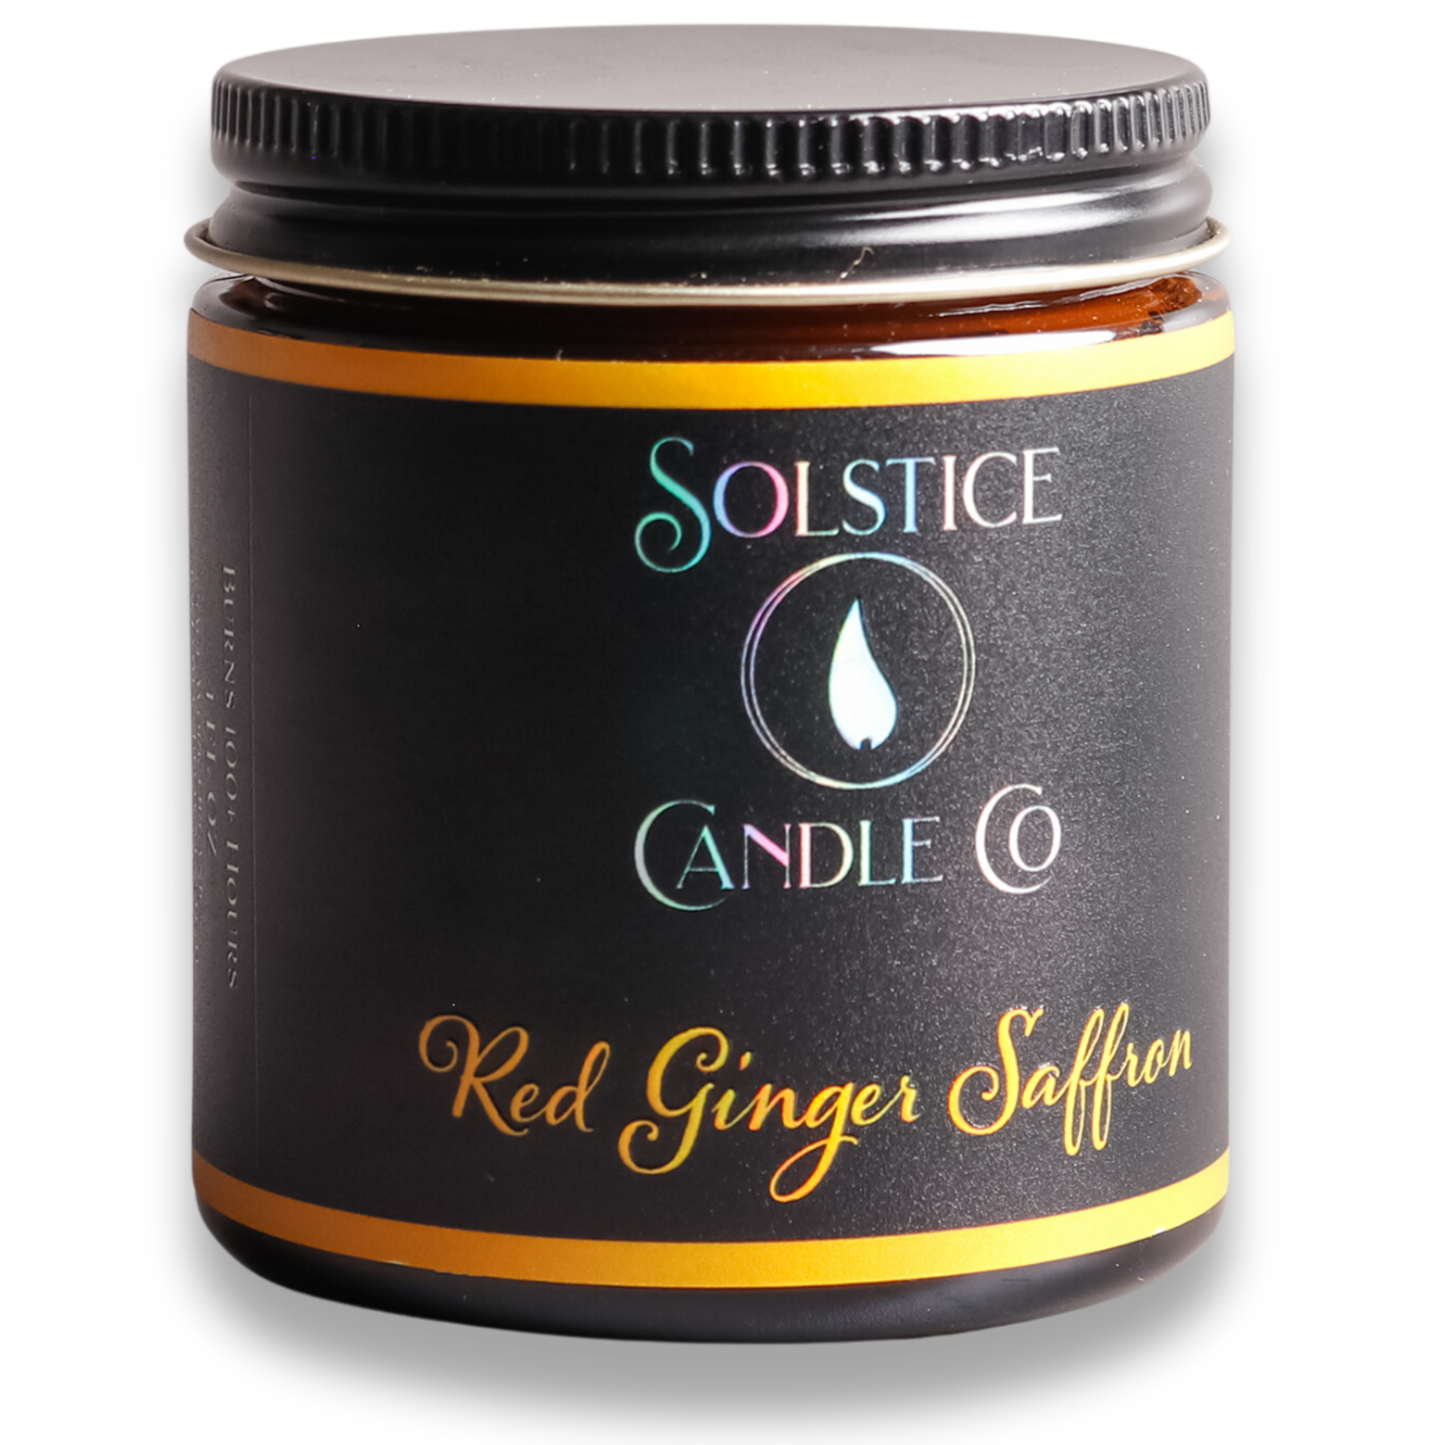 Red Ginger Saffron Candle